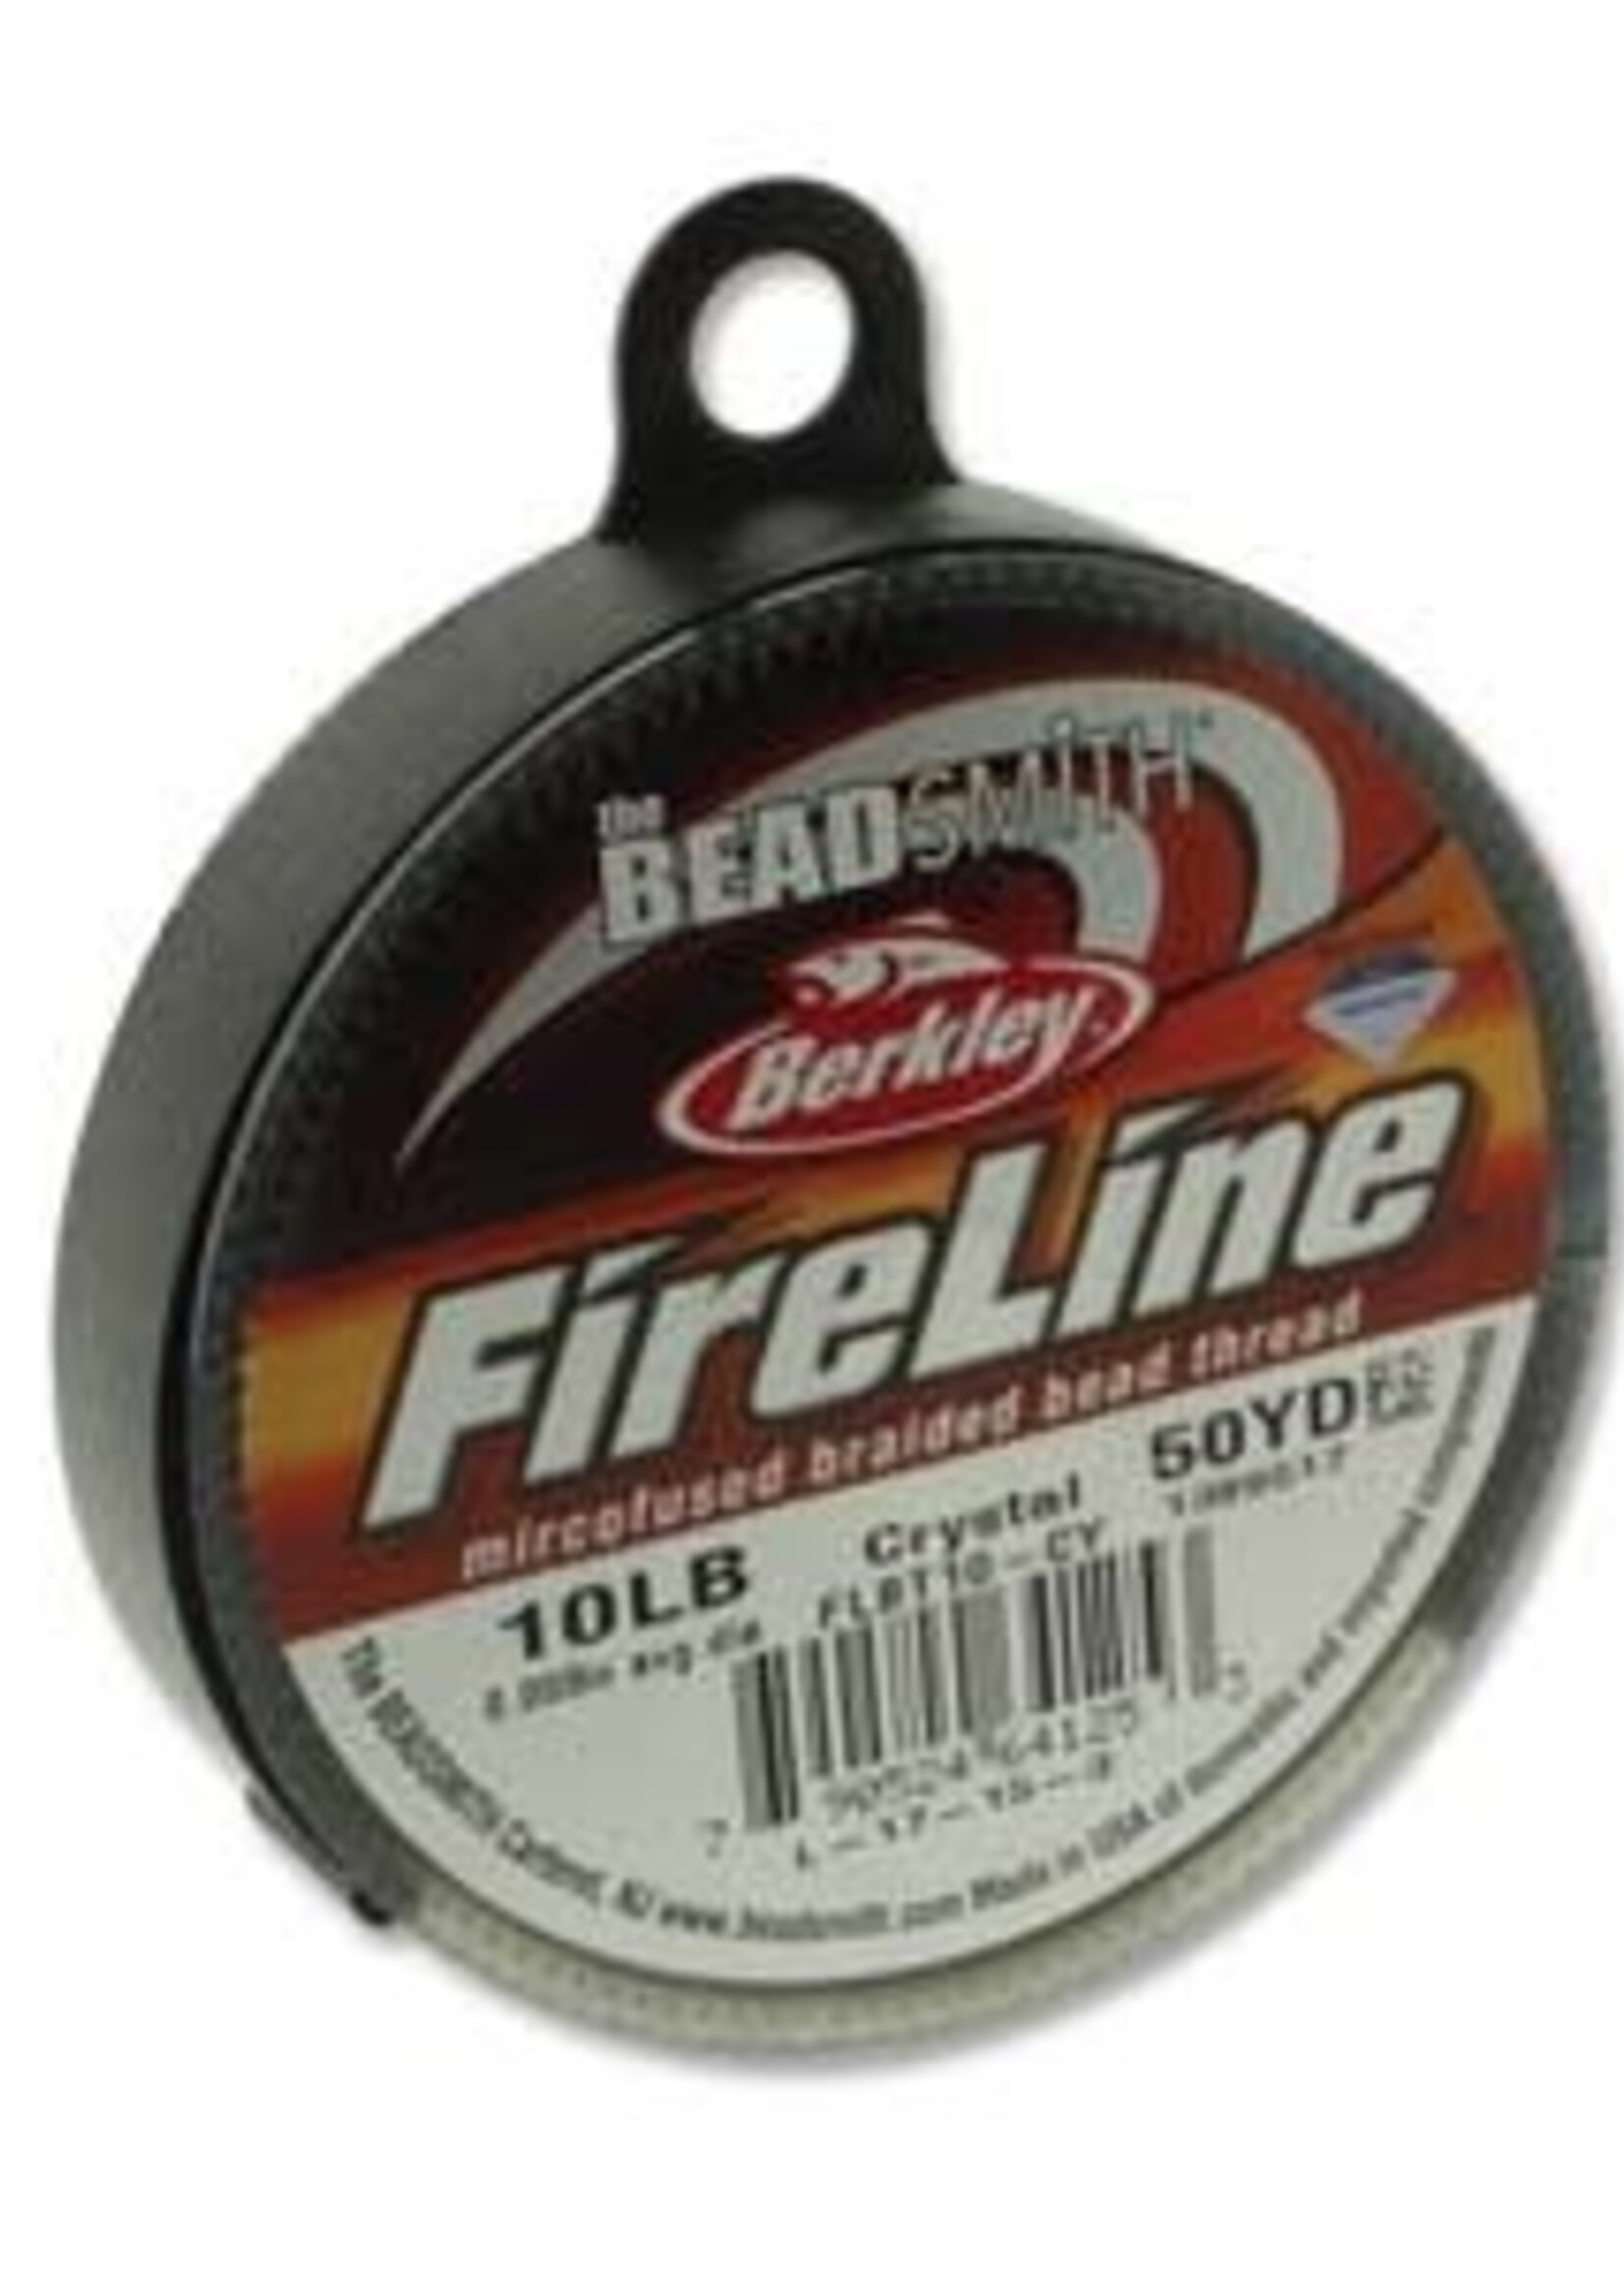 FireLine 10lb Crystal 50 yard Spool